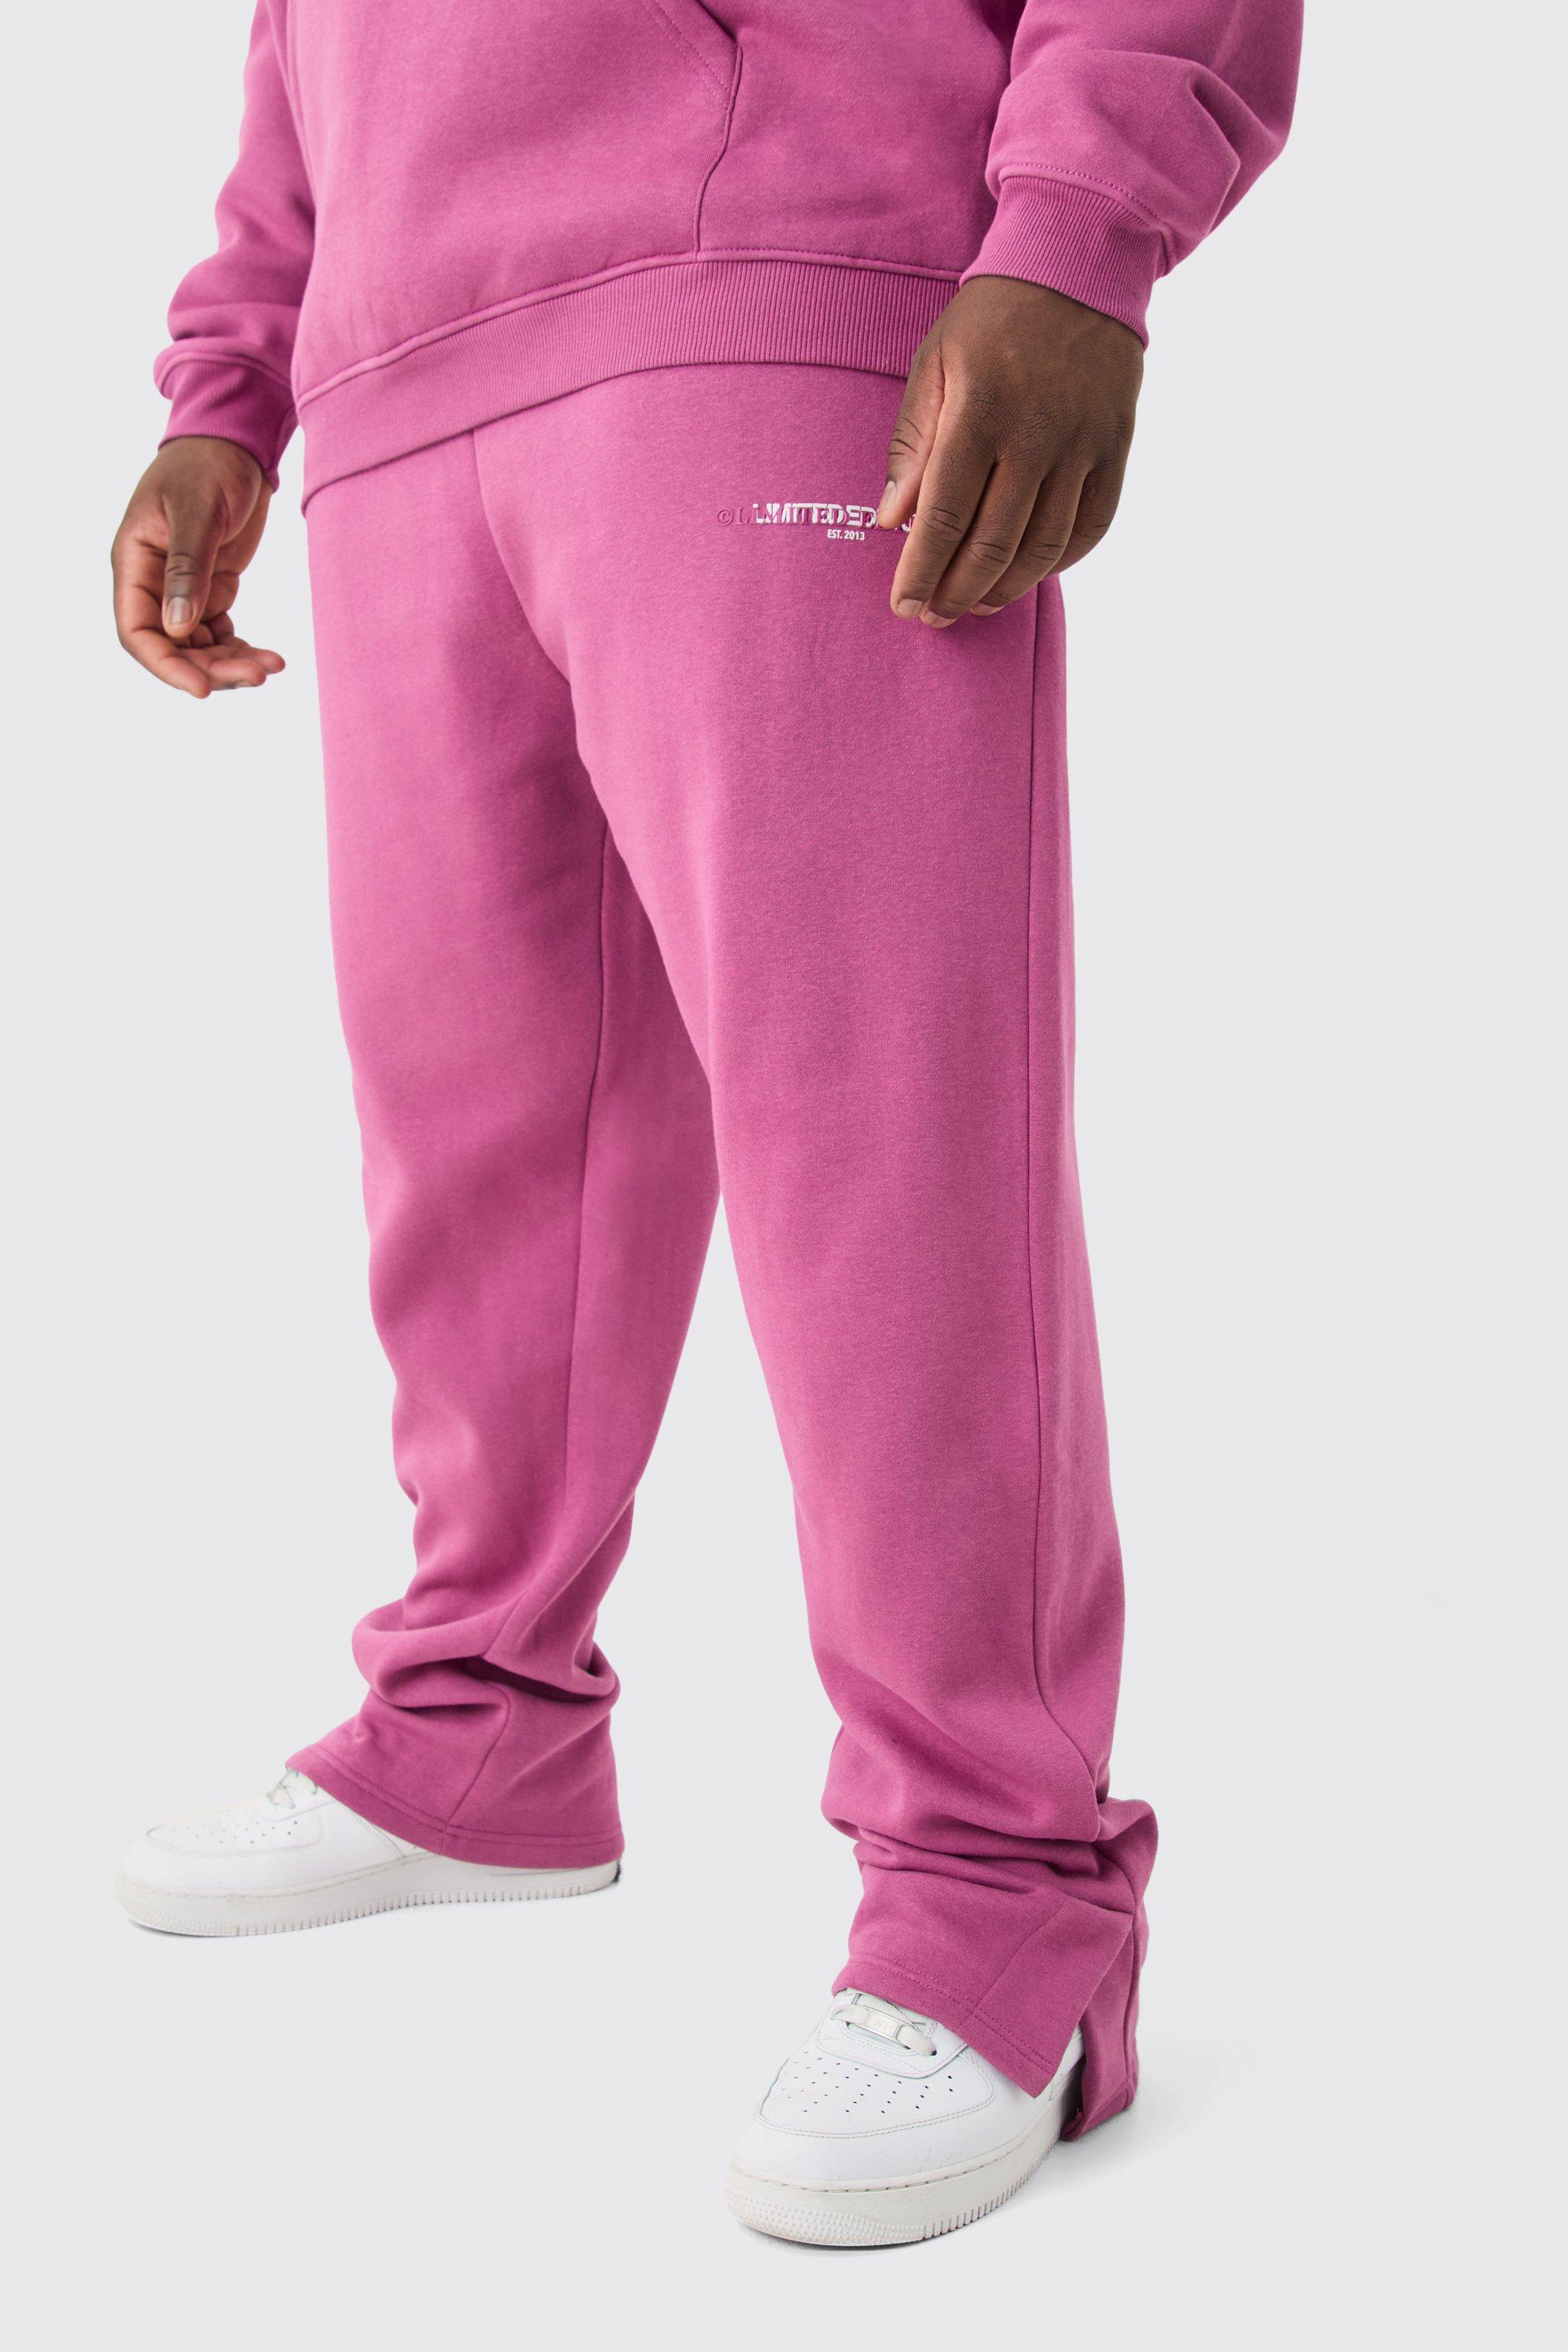 Image of Pantaloni tuta Plus Size Regular Fit Limited con spacco sul fondo, Pink